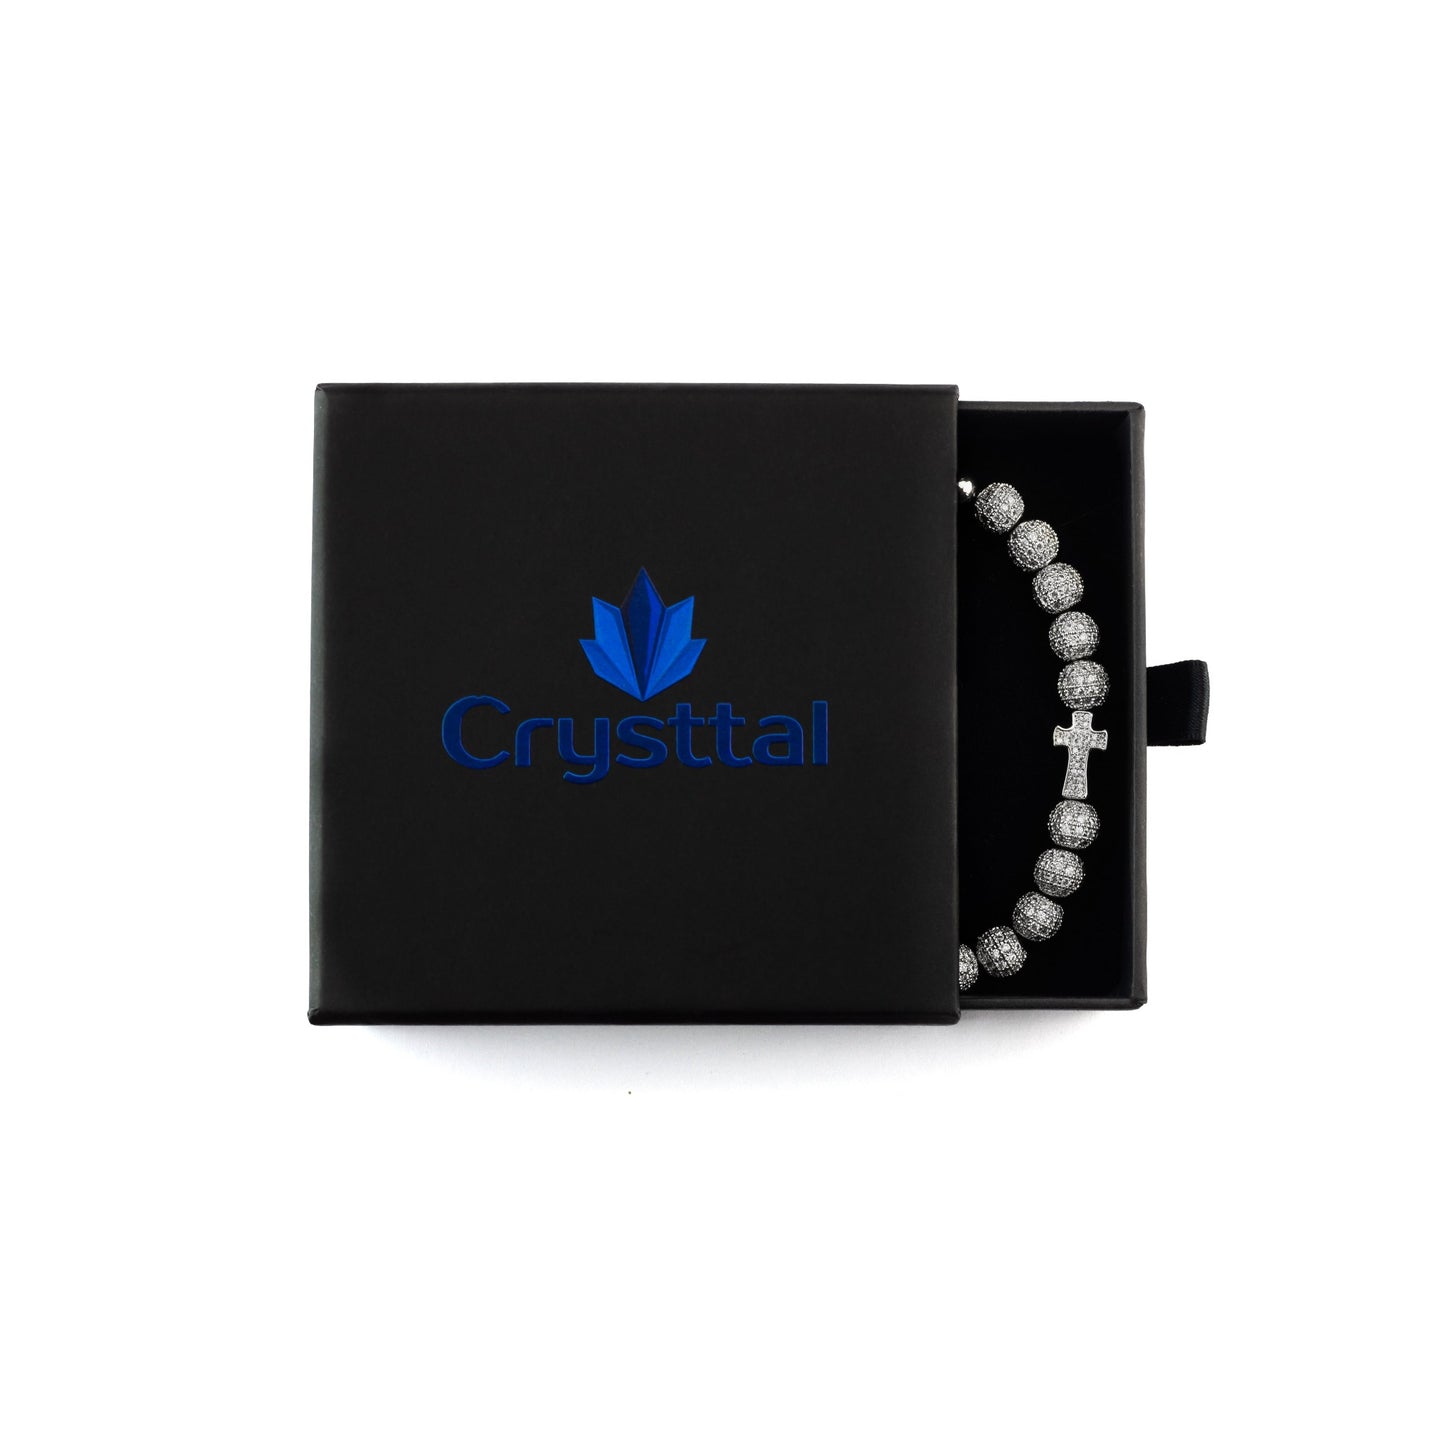 Royal Cross Bracelet in a Crysttal branded gift box